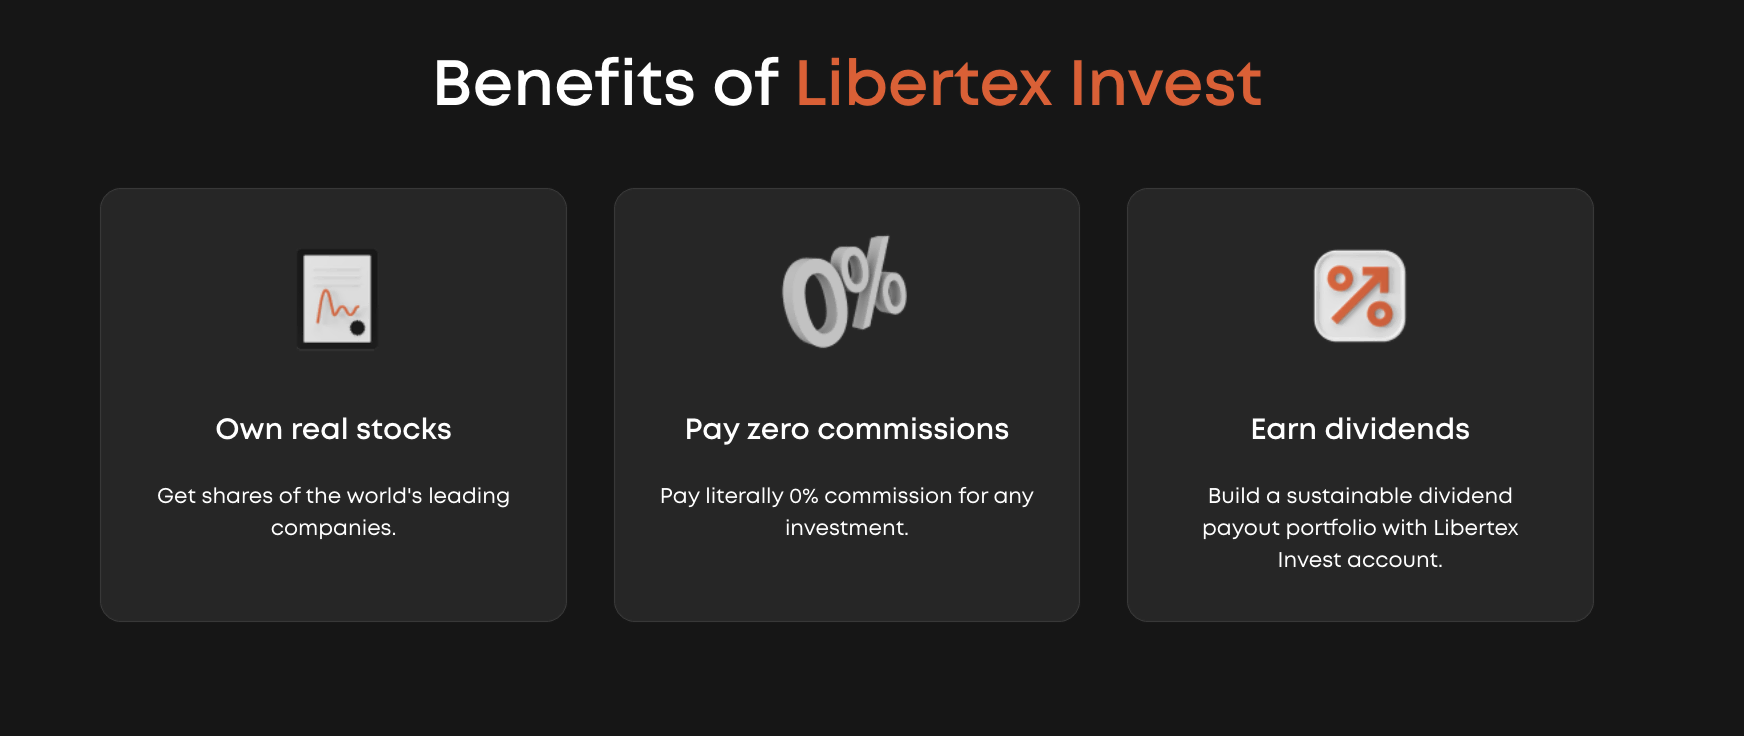 The advantages of Libertex Invest